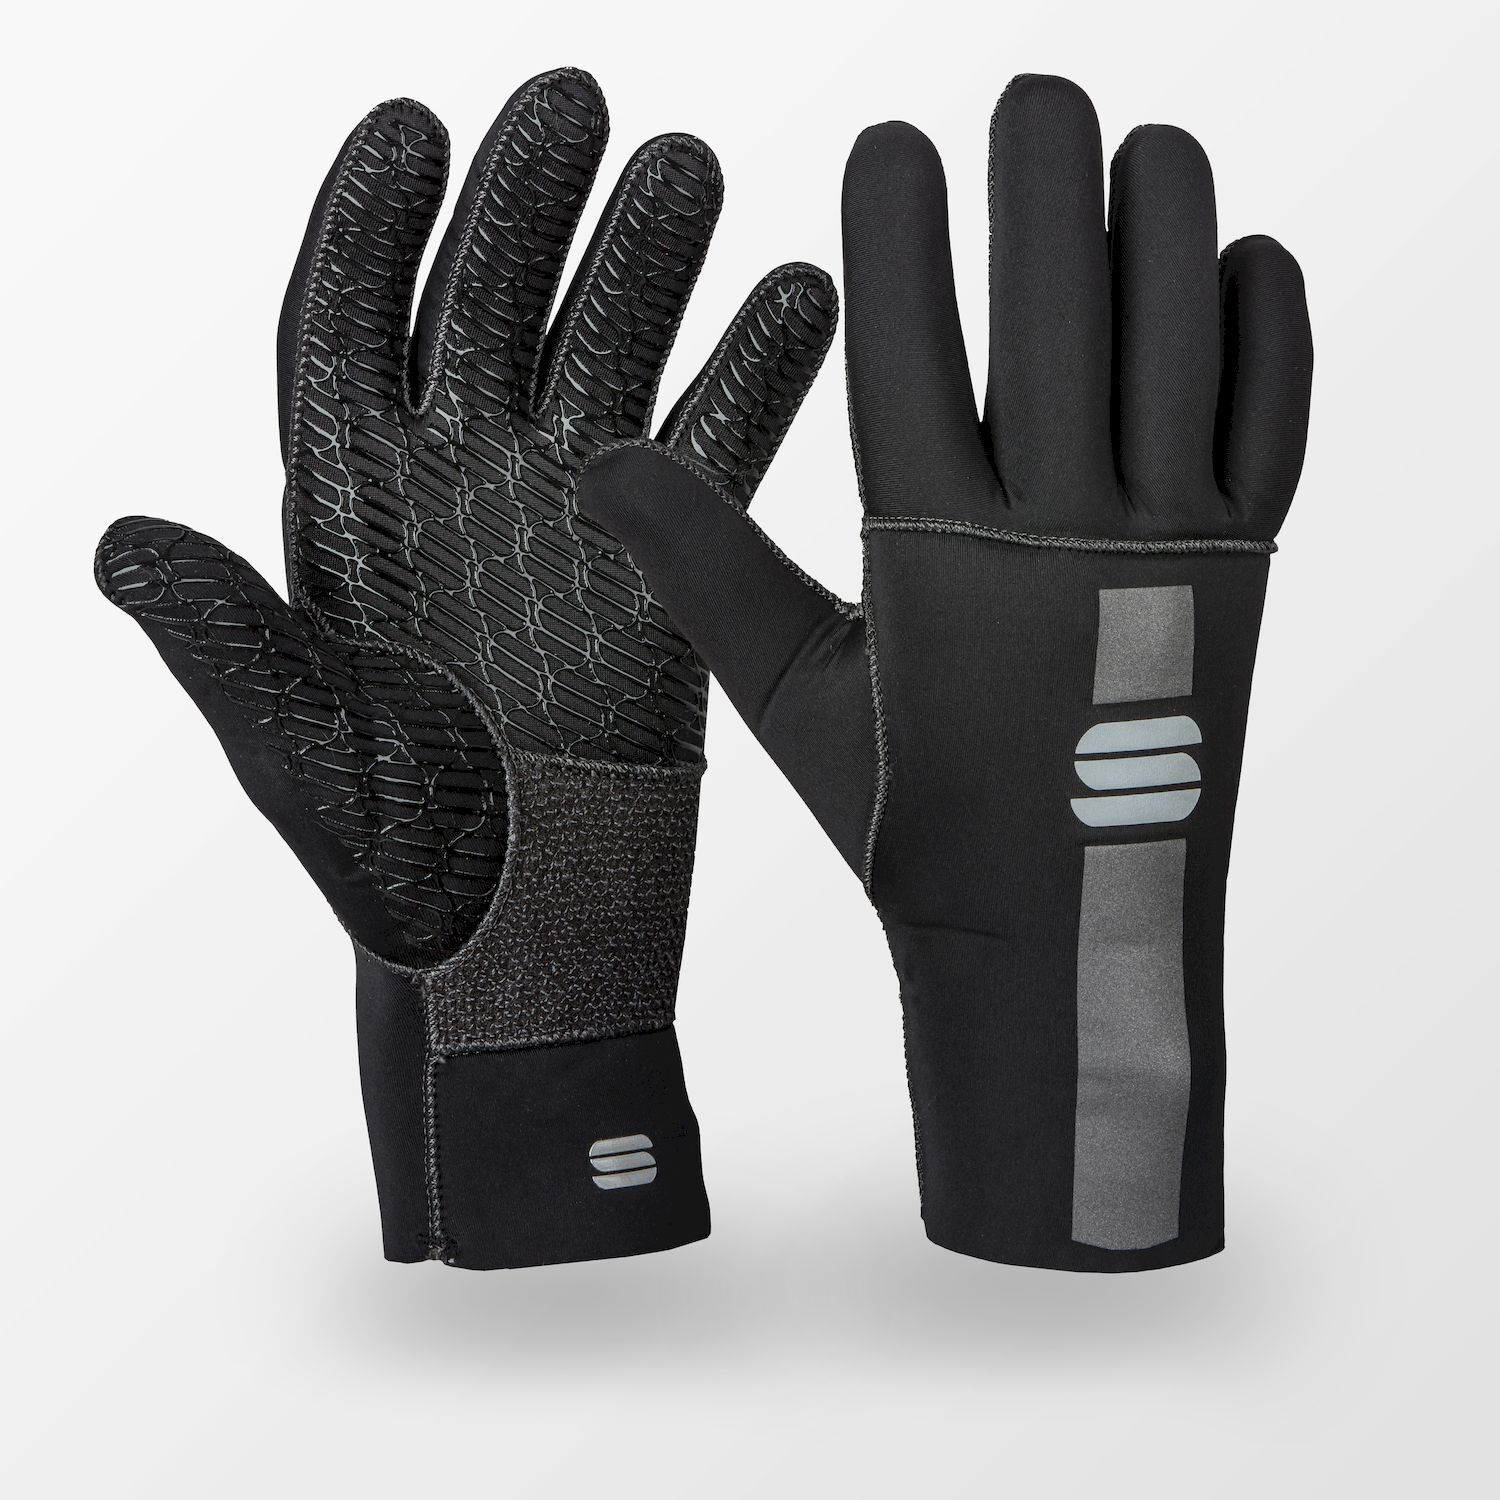 Sportful Neoprene Gloves - Cycling gloves